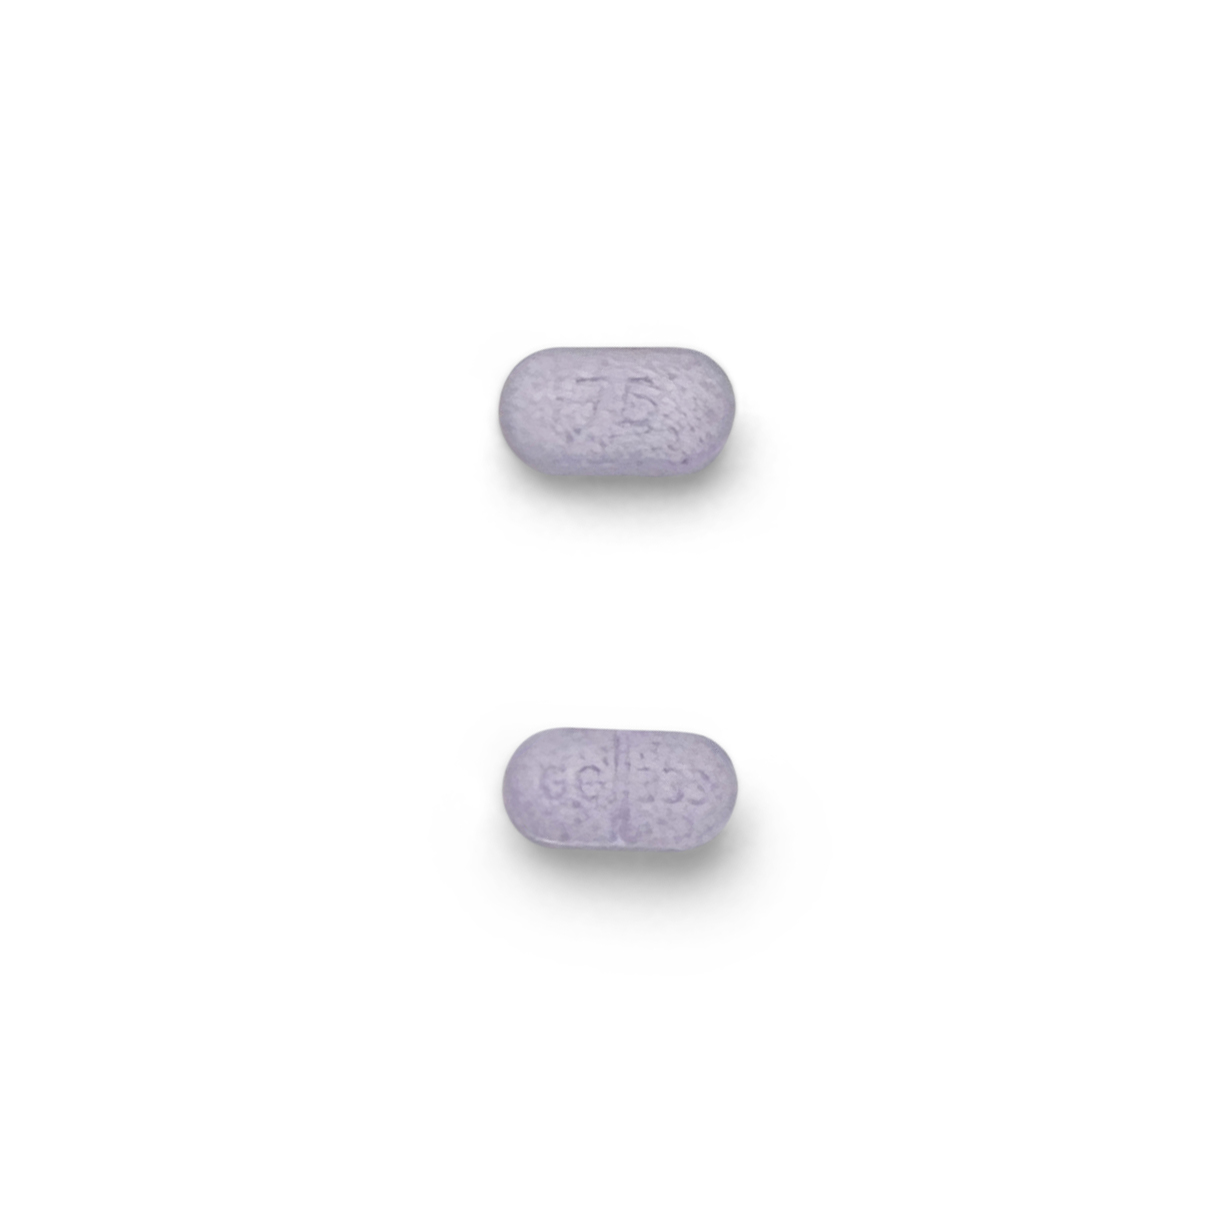 Levothyroxine 75mcg tablet